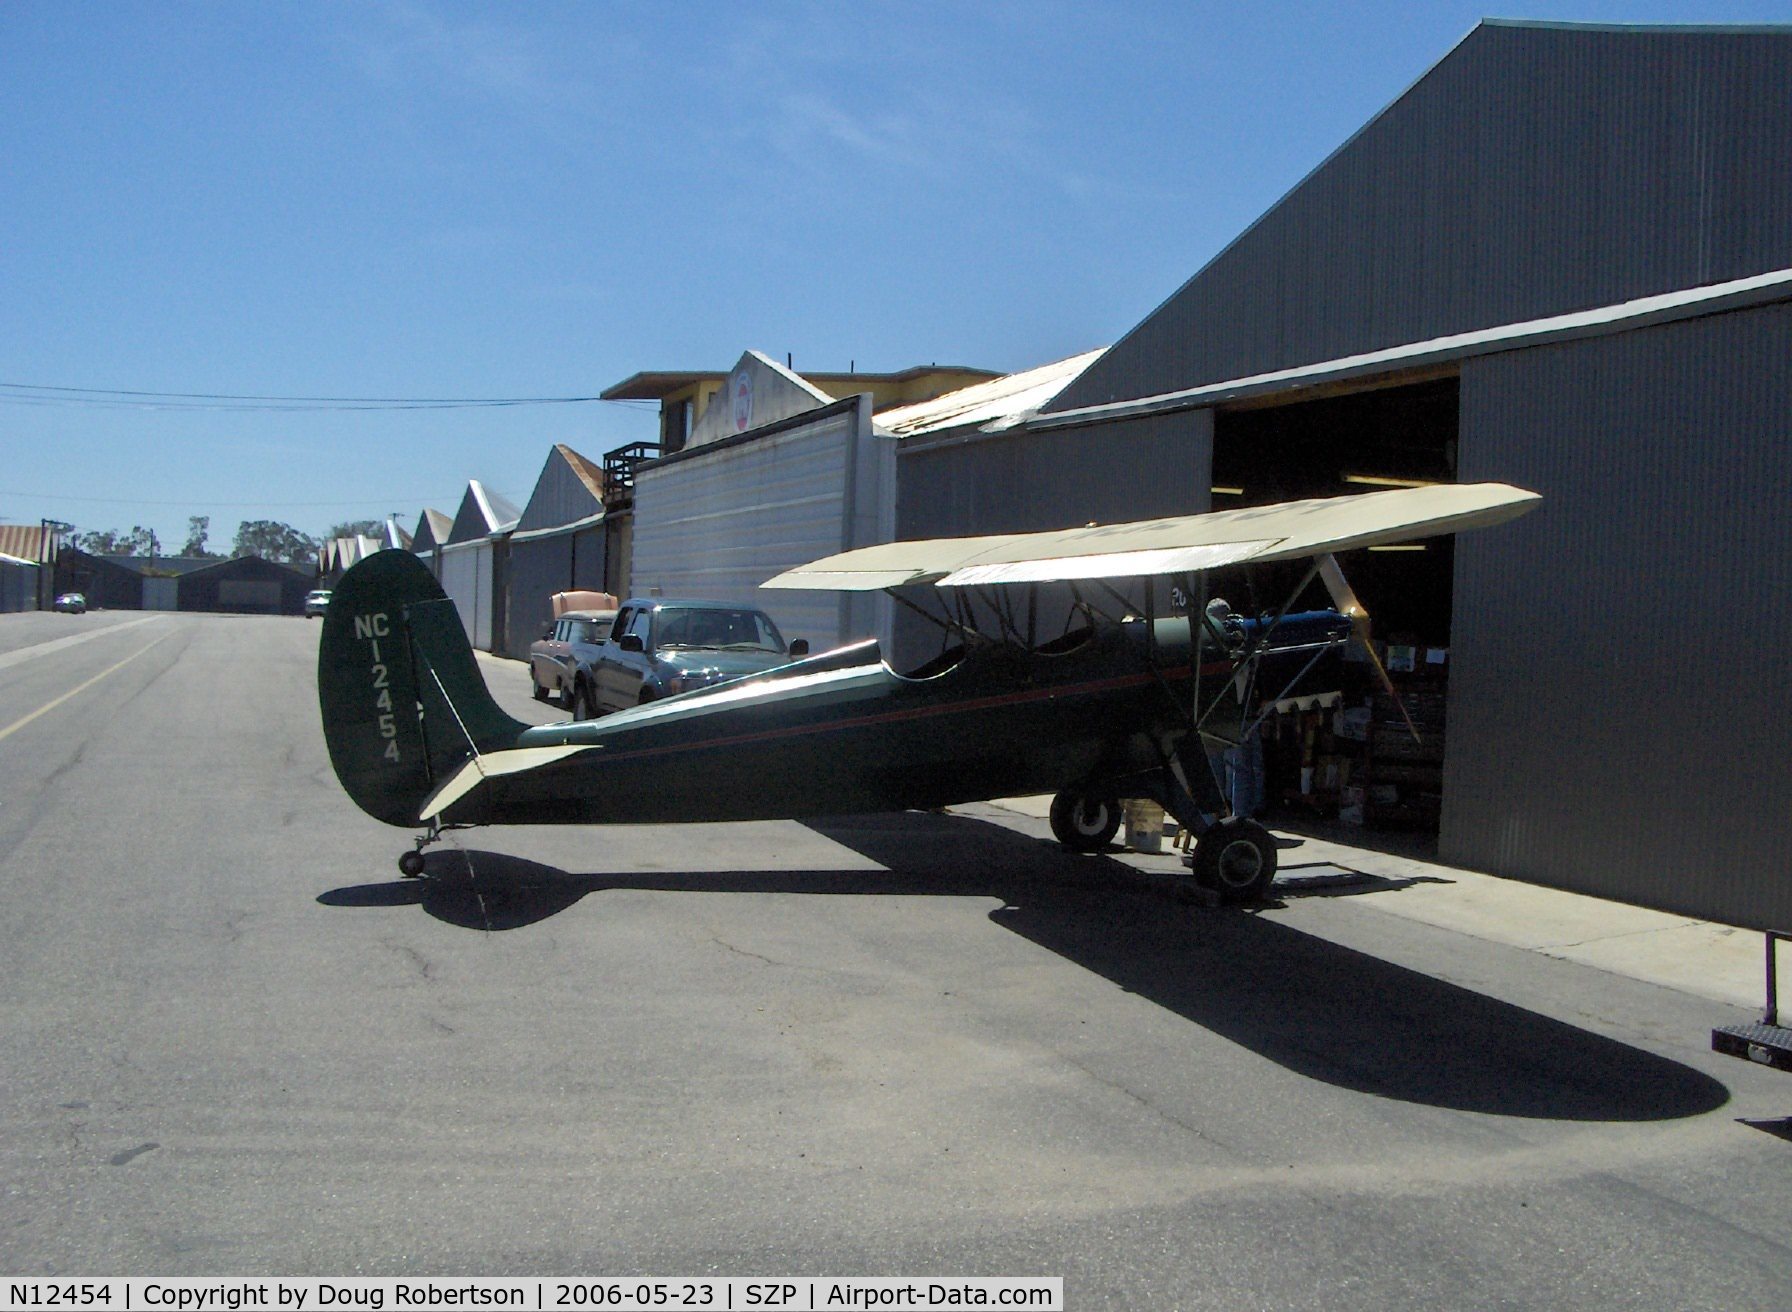 N12454, Fairchild 22 C7B C/N 1503, 1932 Fairchild 22-C7B, Menasco Super Pirate D.4 125 Hp, inverted four cylinder engine, parasol wing